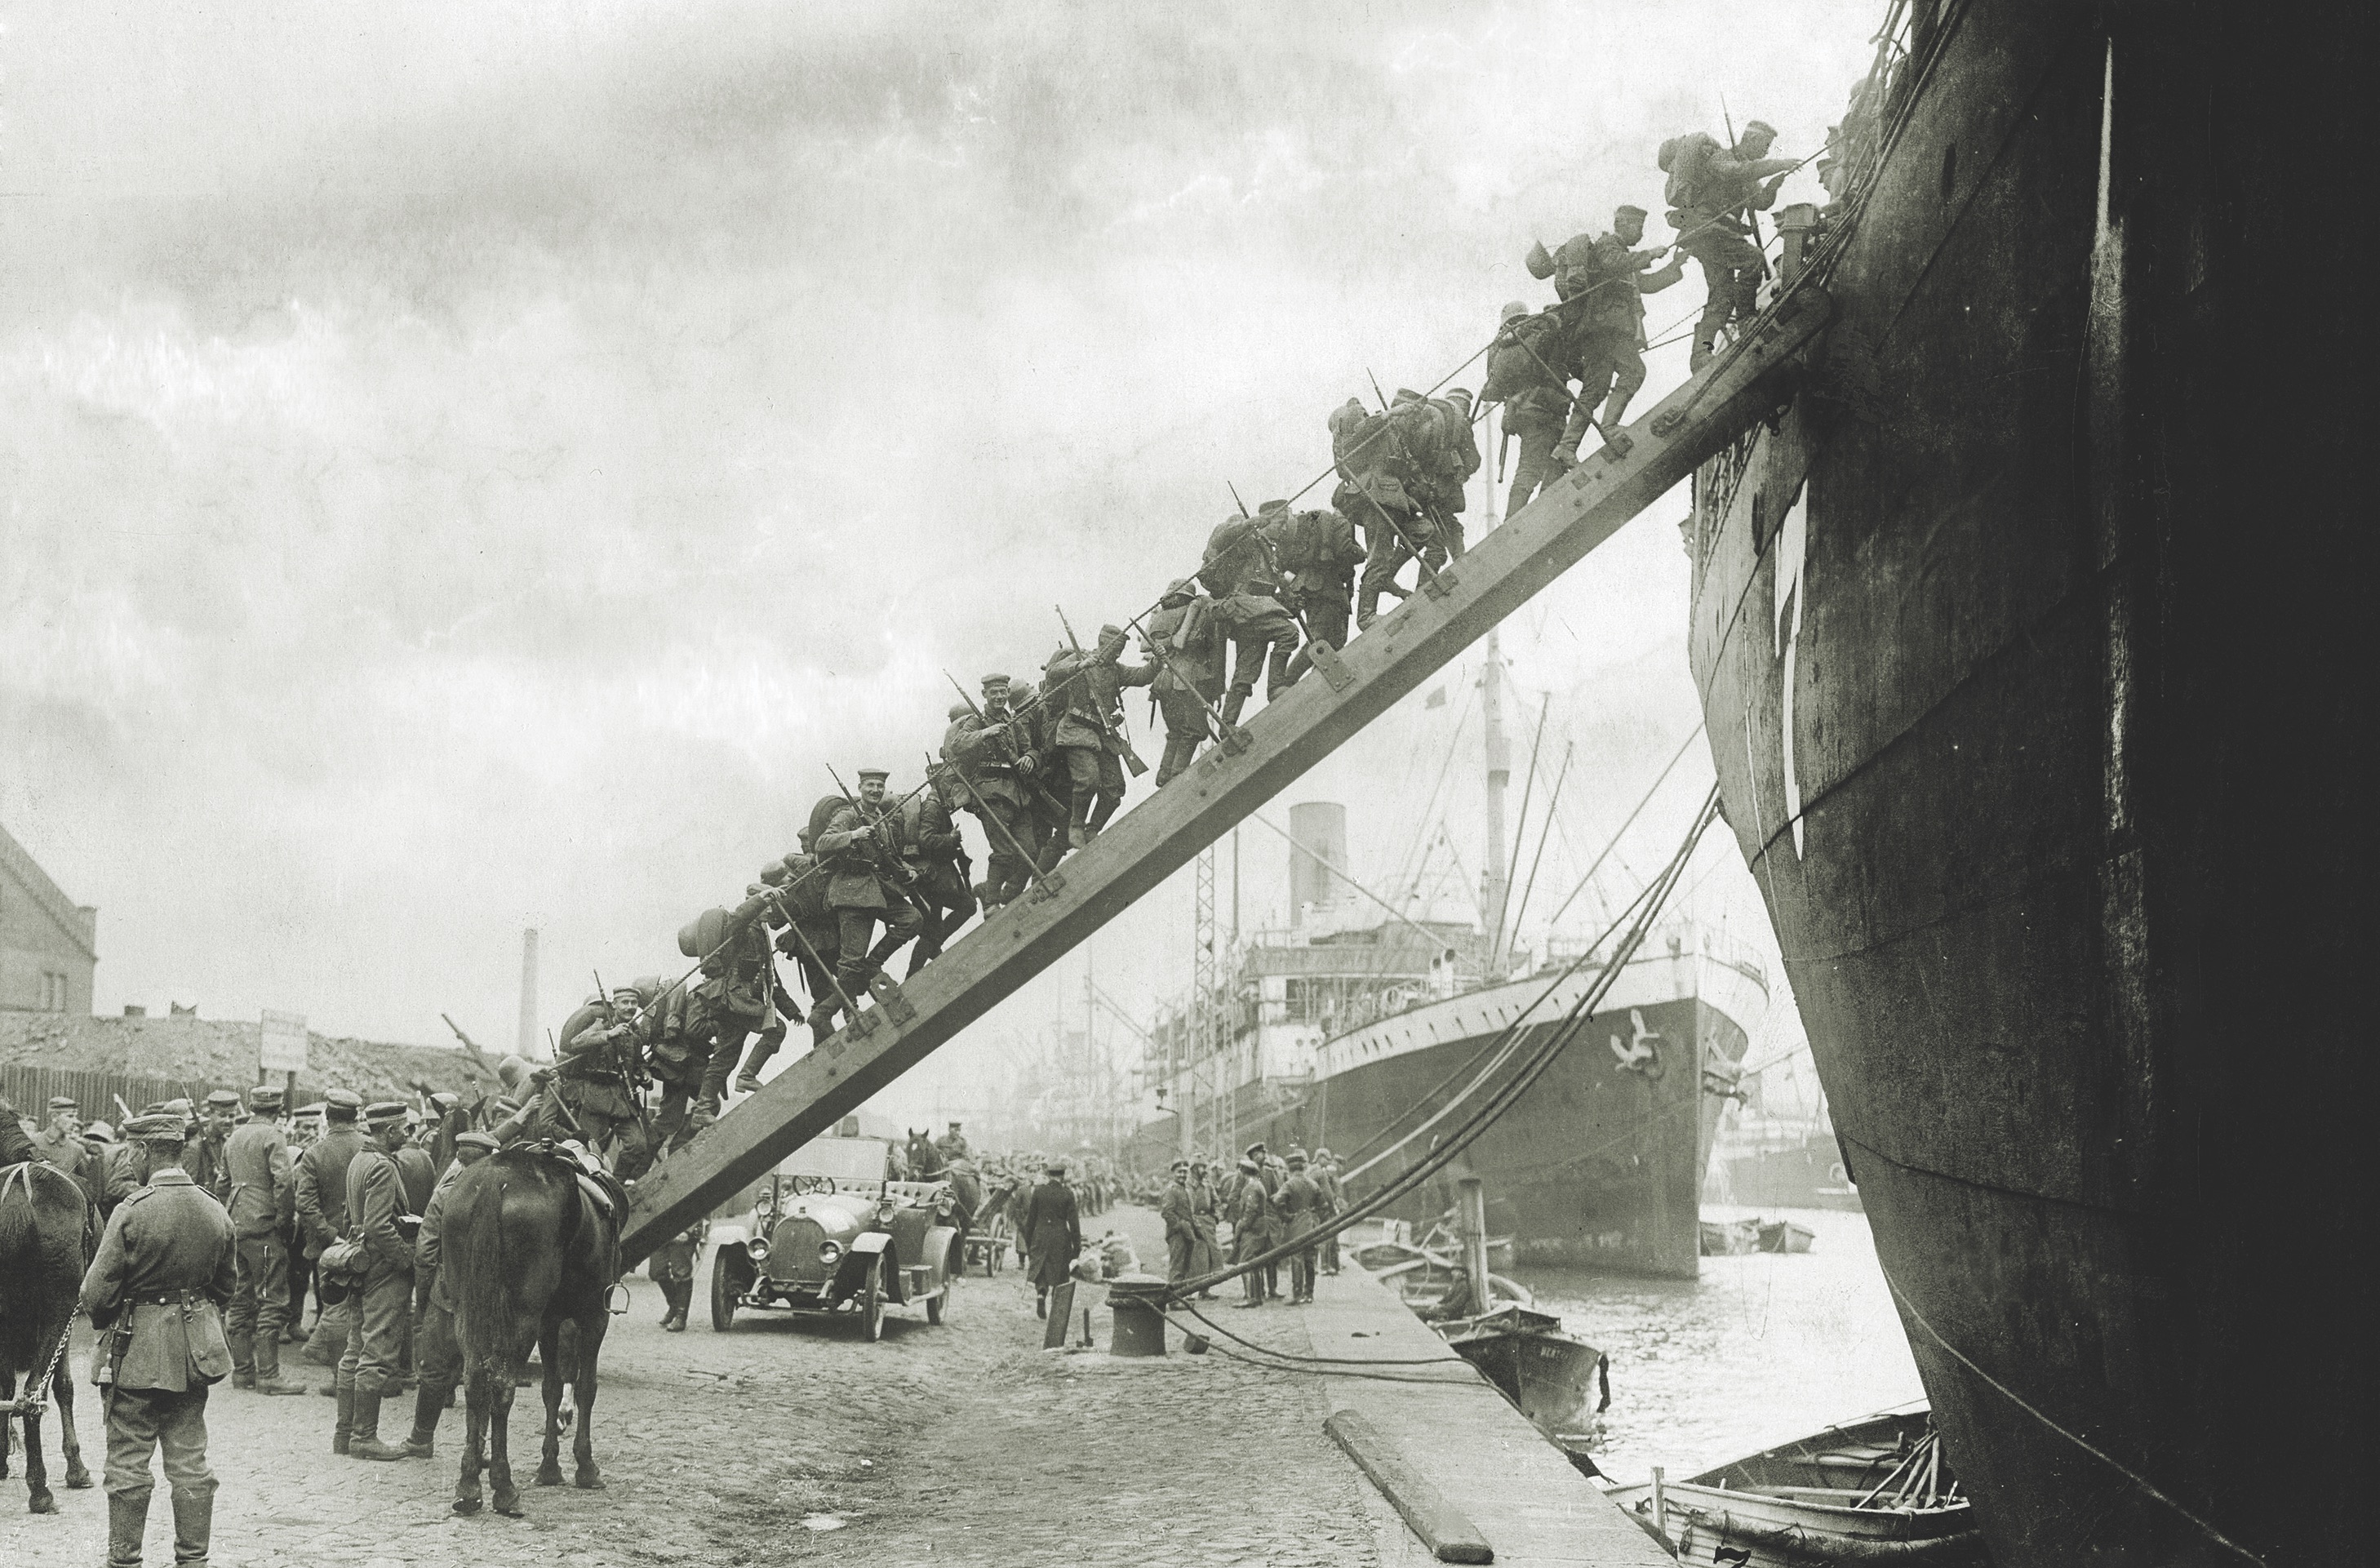 Heavily laden German troops board an Ösel-bound transport in October 1917. (Bridgeman Images)